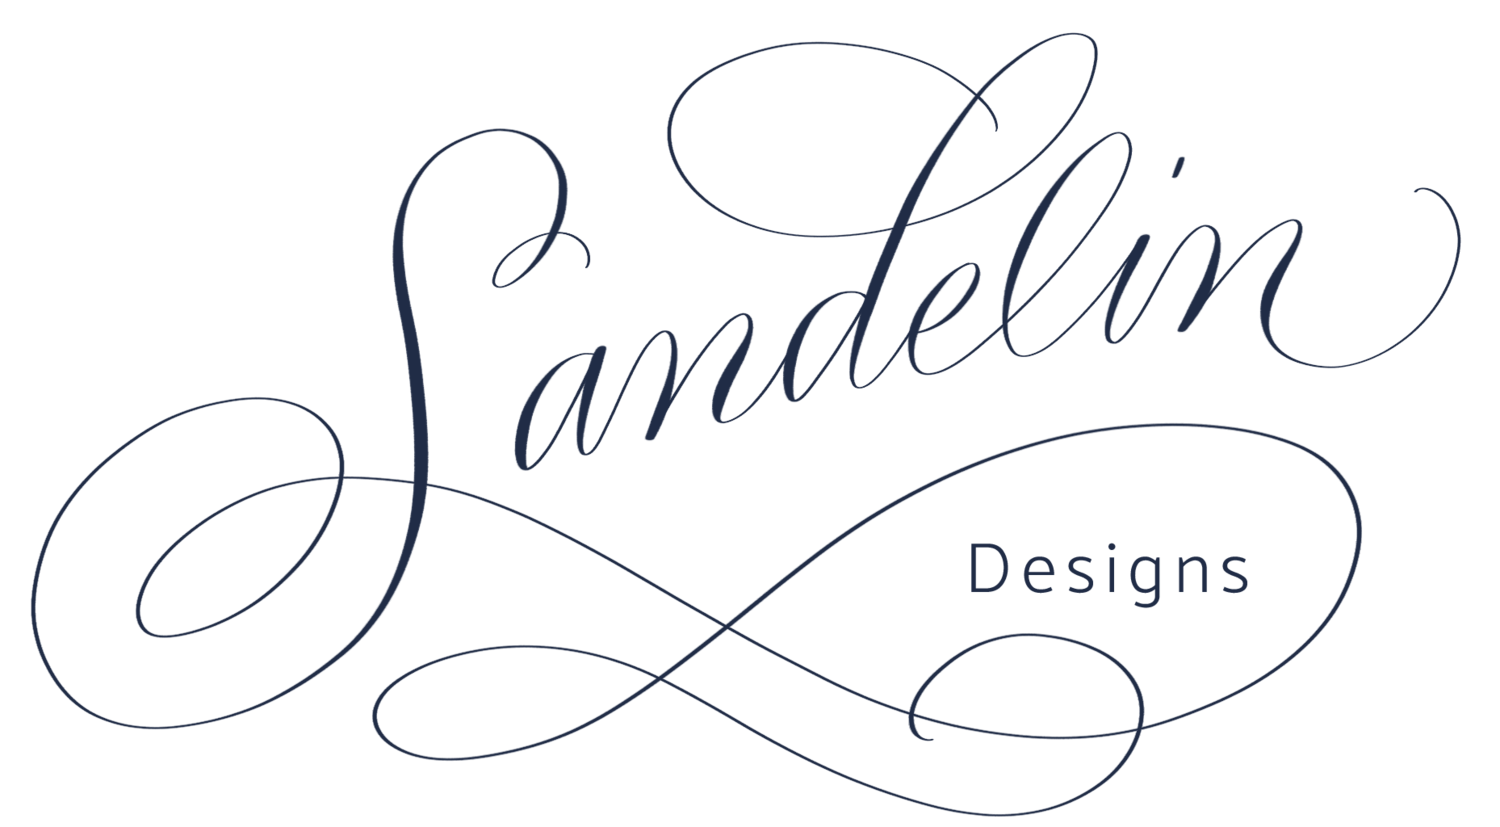 Sandelin Designs | Calligraphy & Engraving